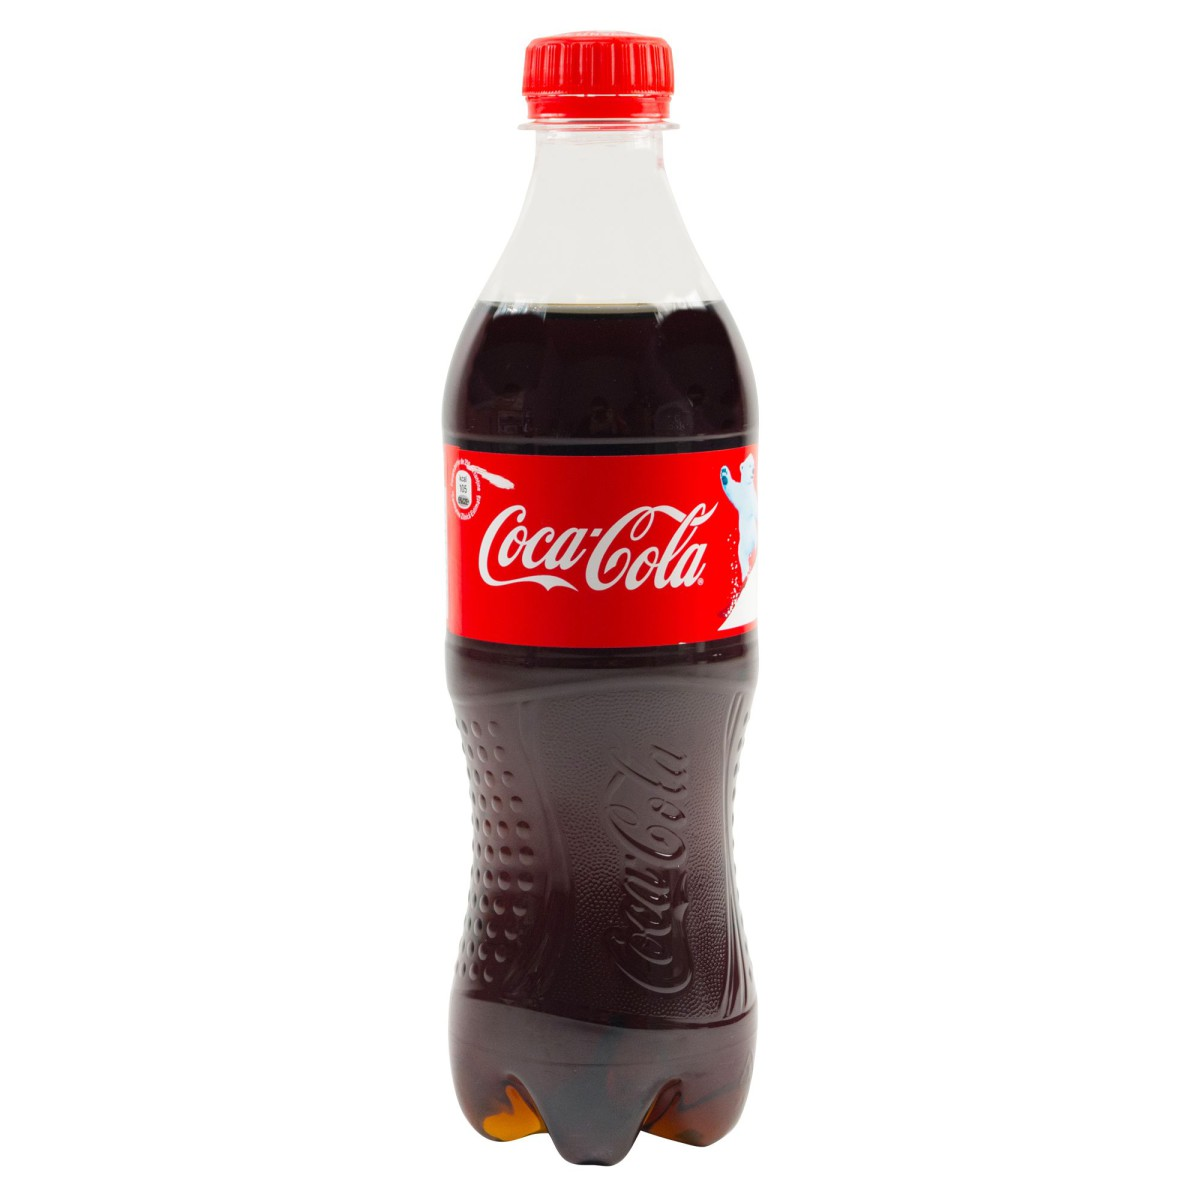 5 л кола. Кока кола 0.5. Cocola 05 l. Кока-кола 0.5 л. Coca-Cola 1.5л.